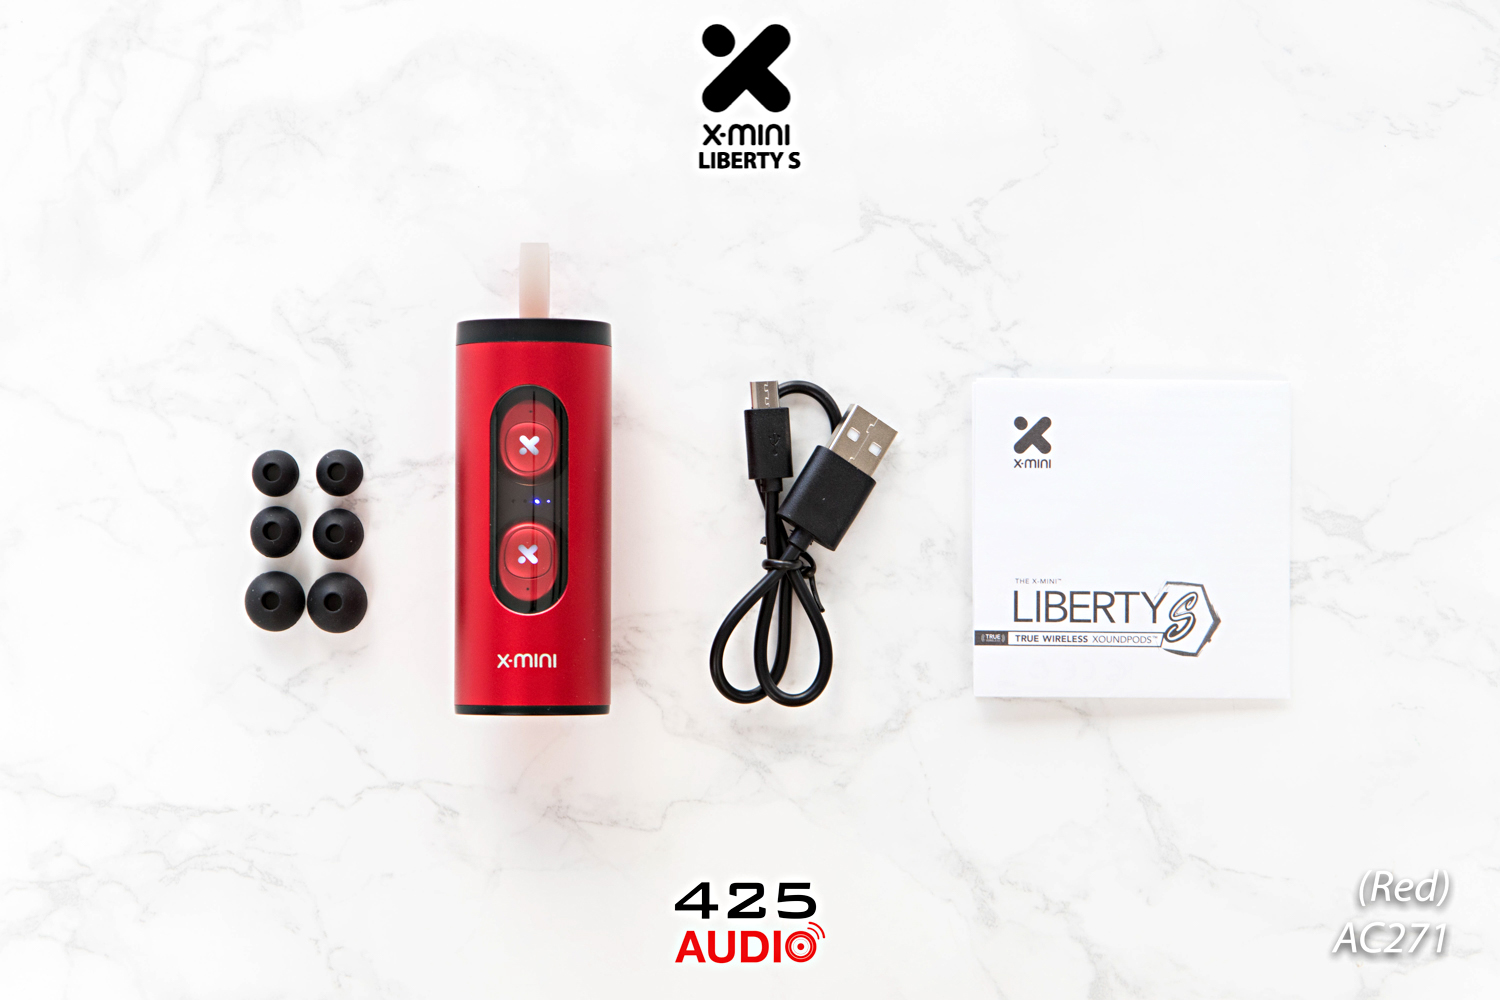 x-mini,liberty S,true wireless,bluetooth 5.0,ipx4,red,iron man,dynamic,graphene,mono mode,small,compact,light,battery life,comfortable